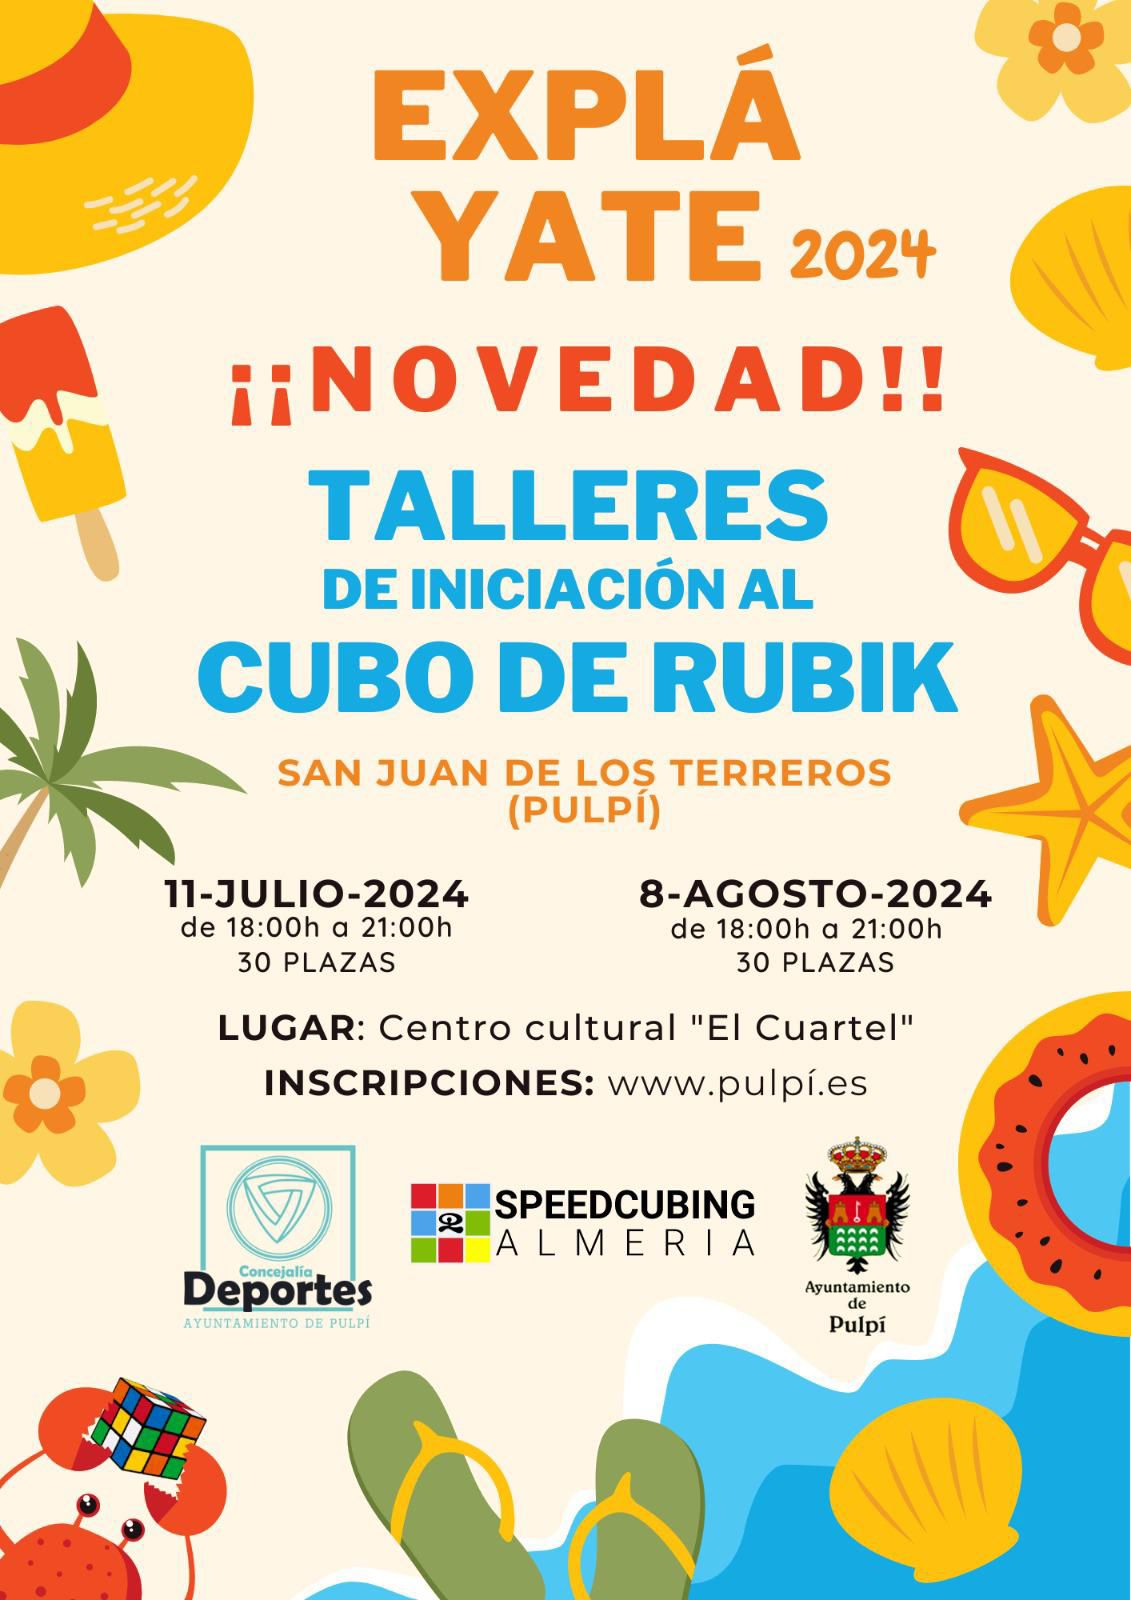 TALLERES DE INICIACION CUBO DE RUBIK EXPLAYATE 2024